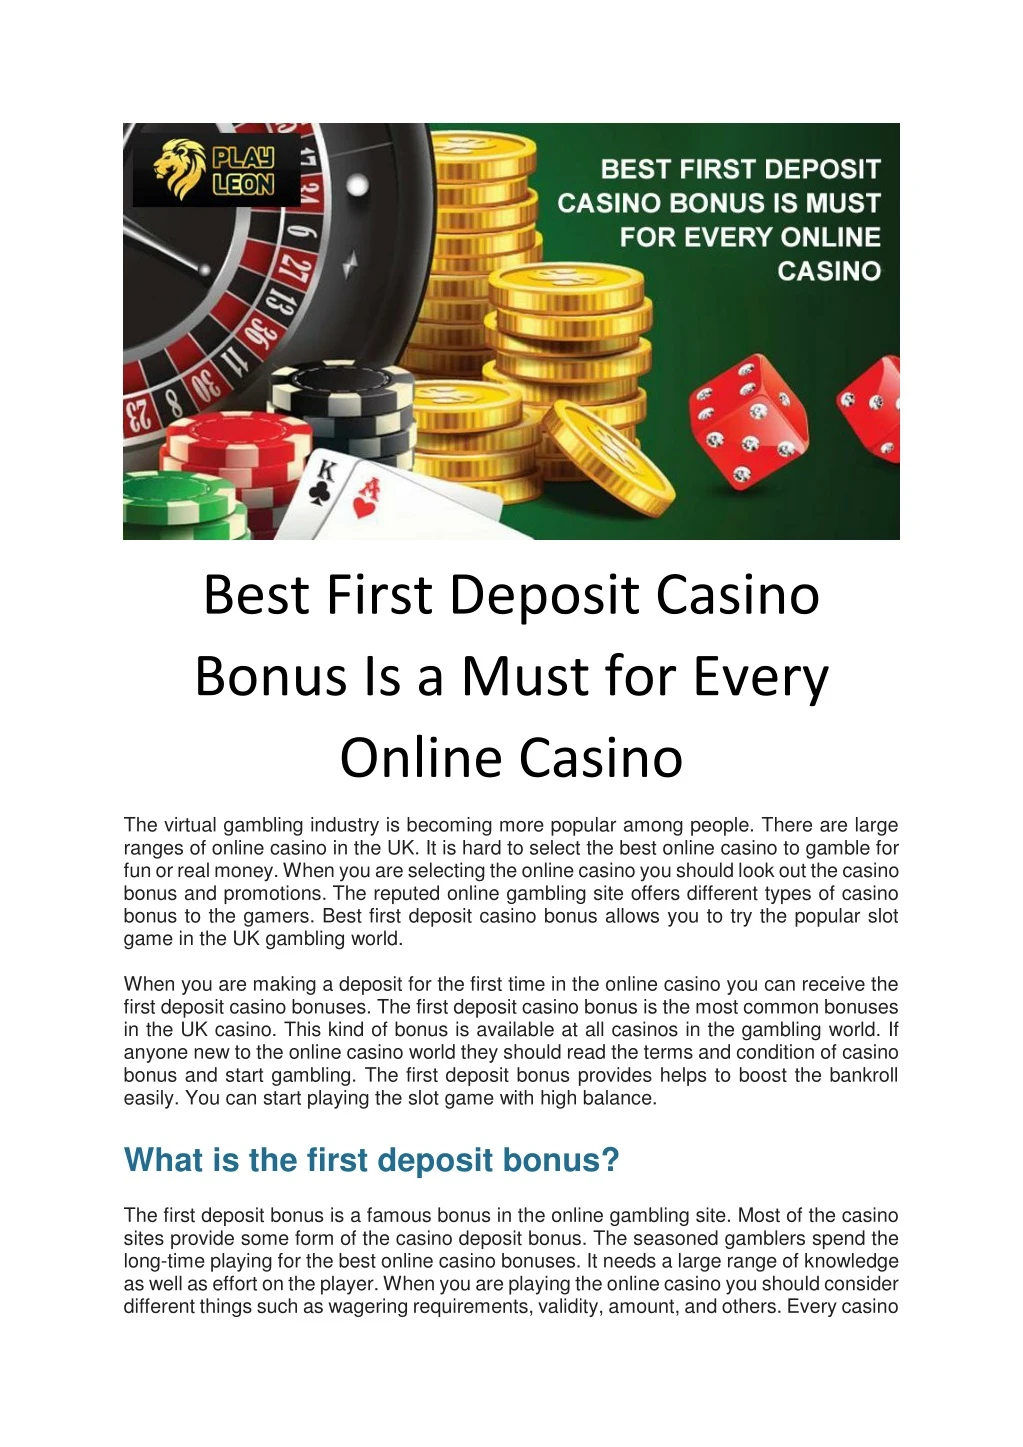 best first deposit casino bonus is a must